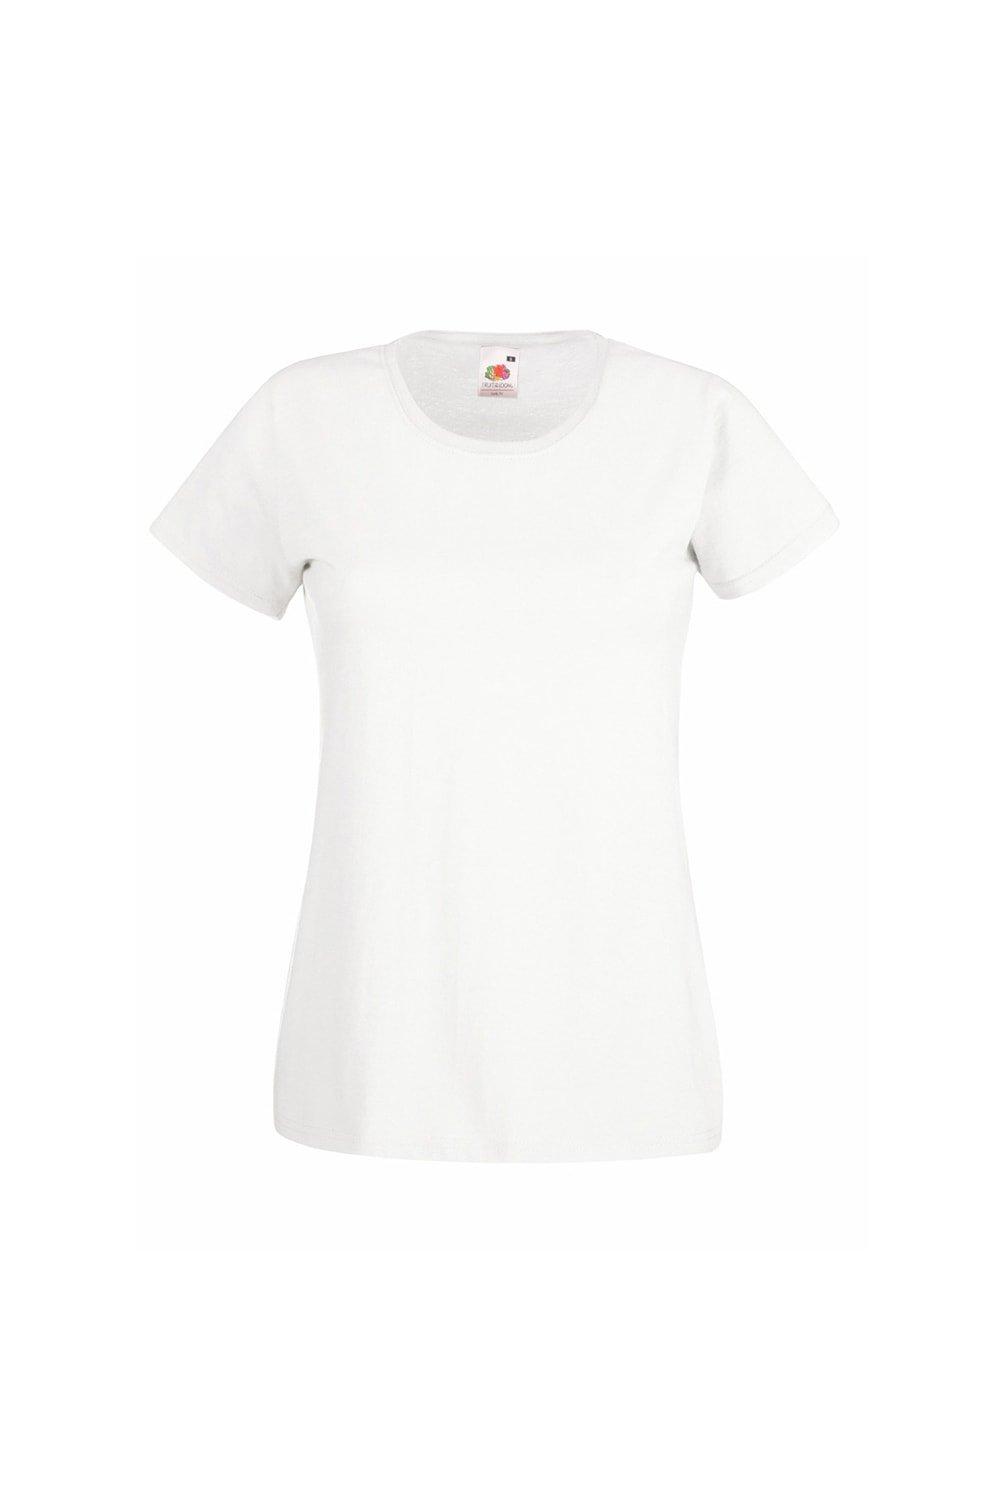 Повседневная футболка с короткими рукавами Value Universal Textiles, белый повседневная футболка value с длинным рукавом universal textiles белый